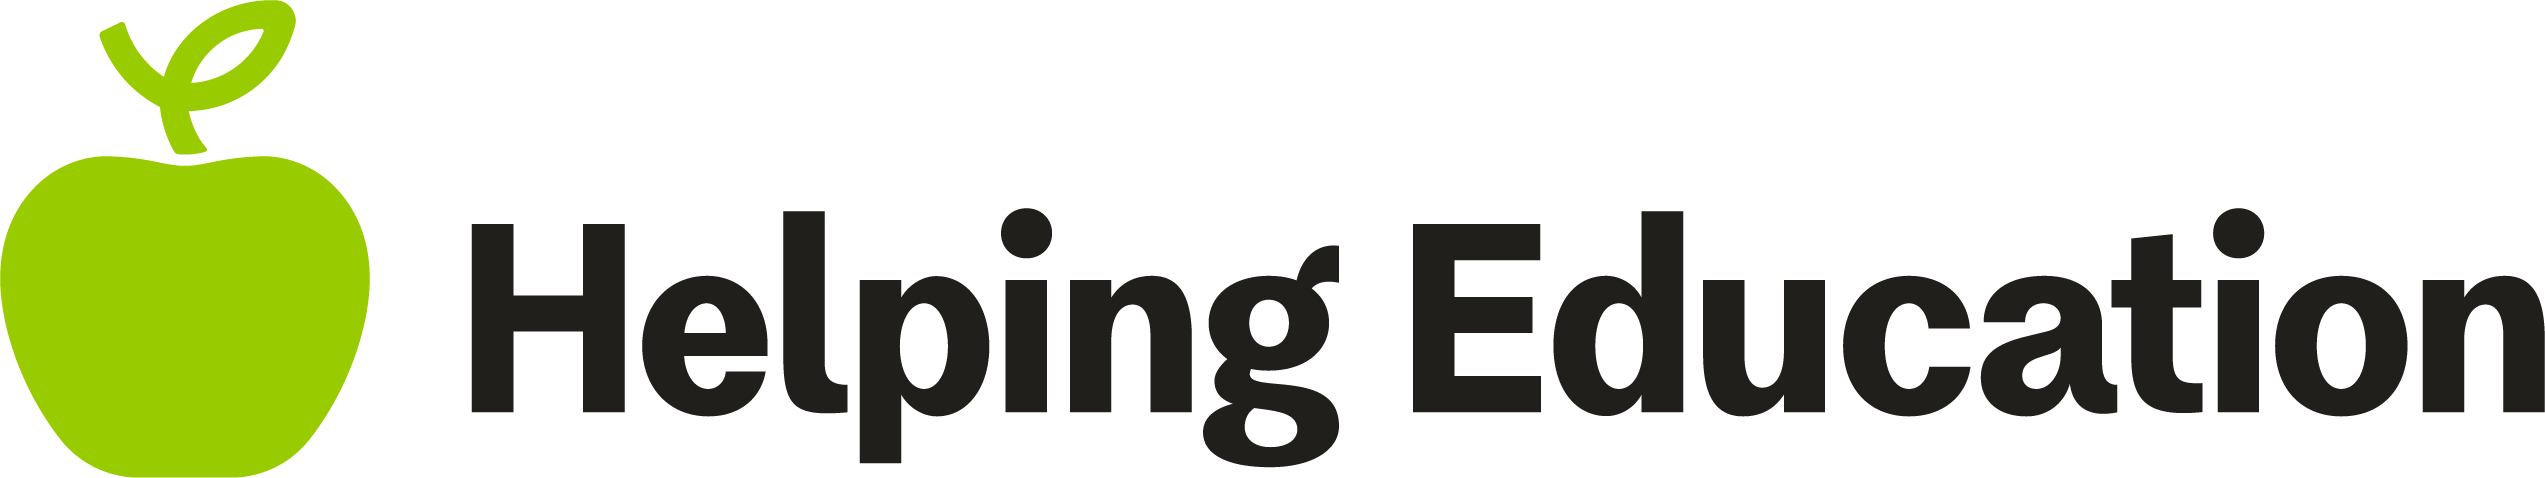 Helping Education Logo